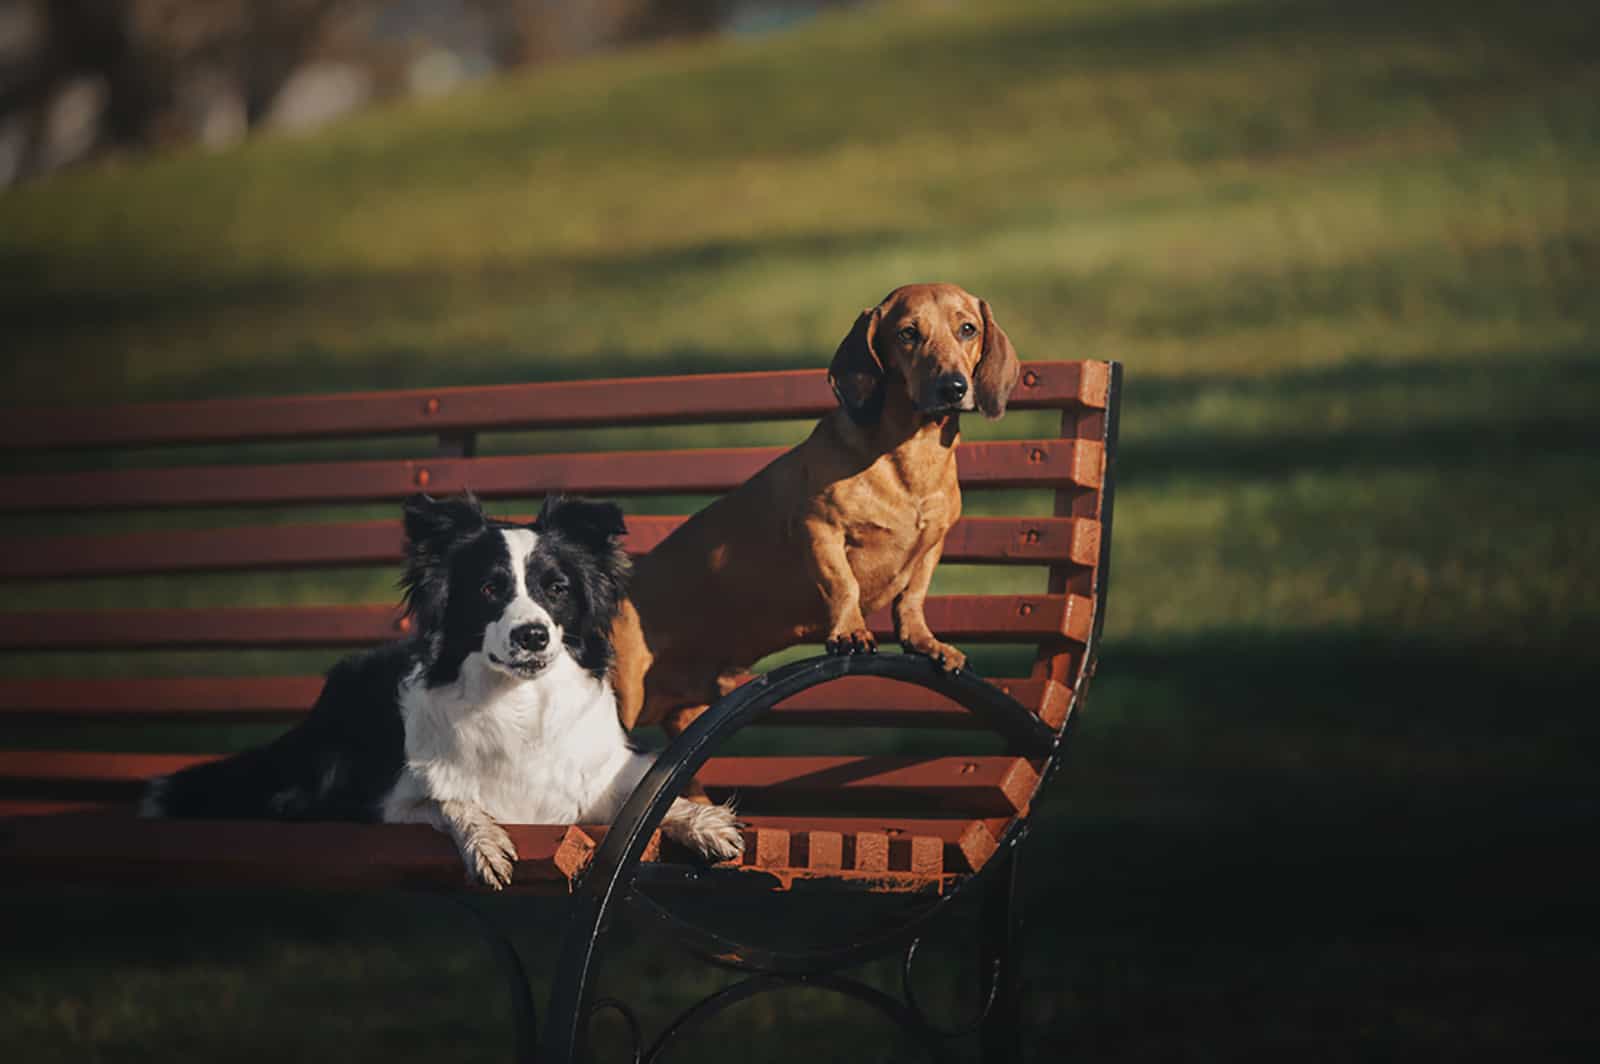 dachshund and border collie